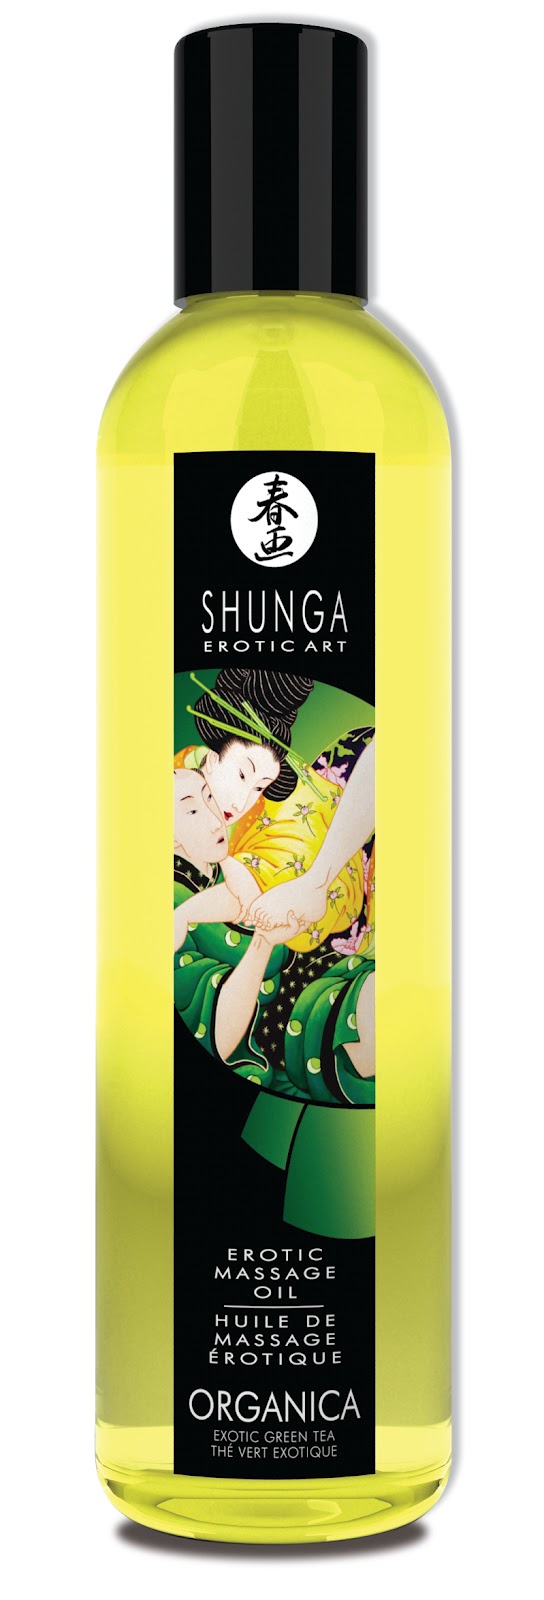 Интимное масло для смазки. Shunga массажное масло Organica. Shunga массажное масло Organica exotic Green Tea, 250 мл. Масло массажное Shunga Organica с миндалем.